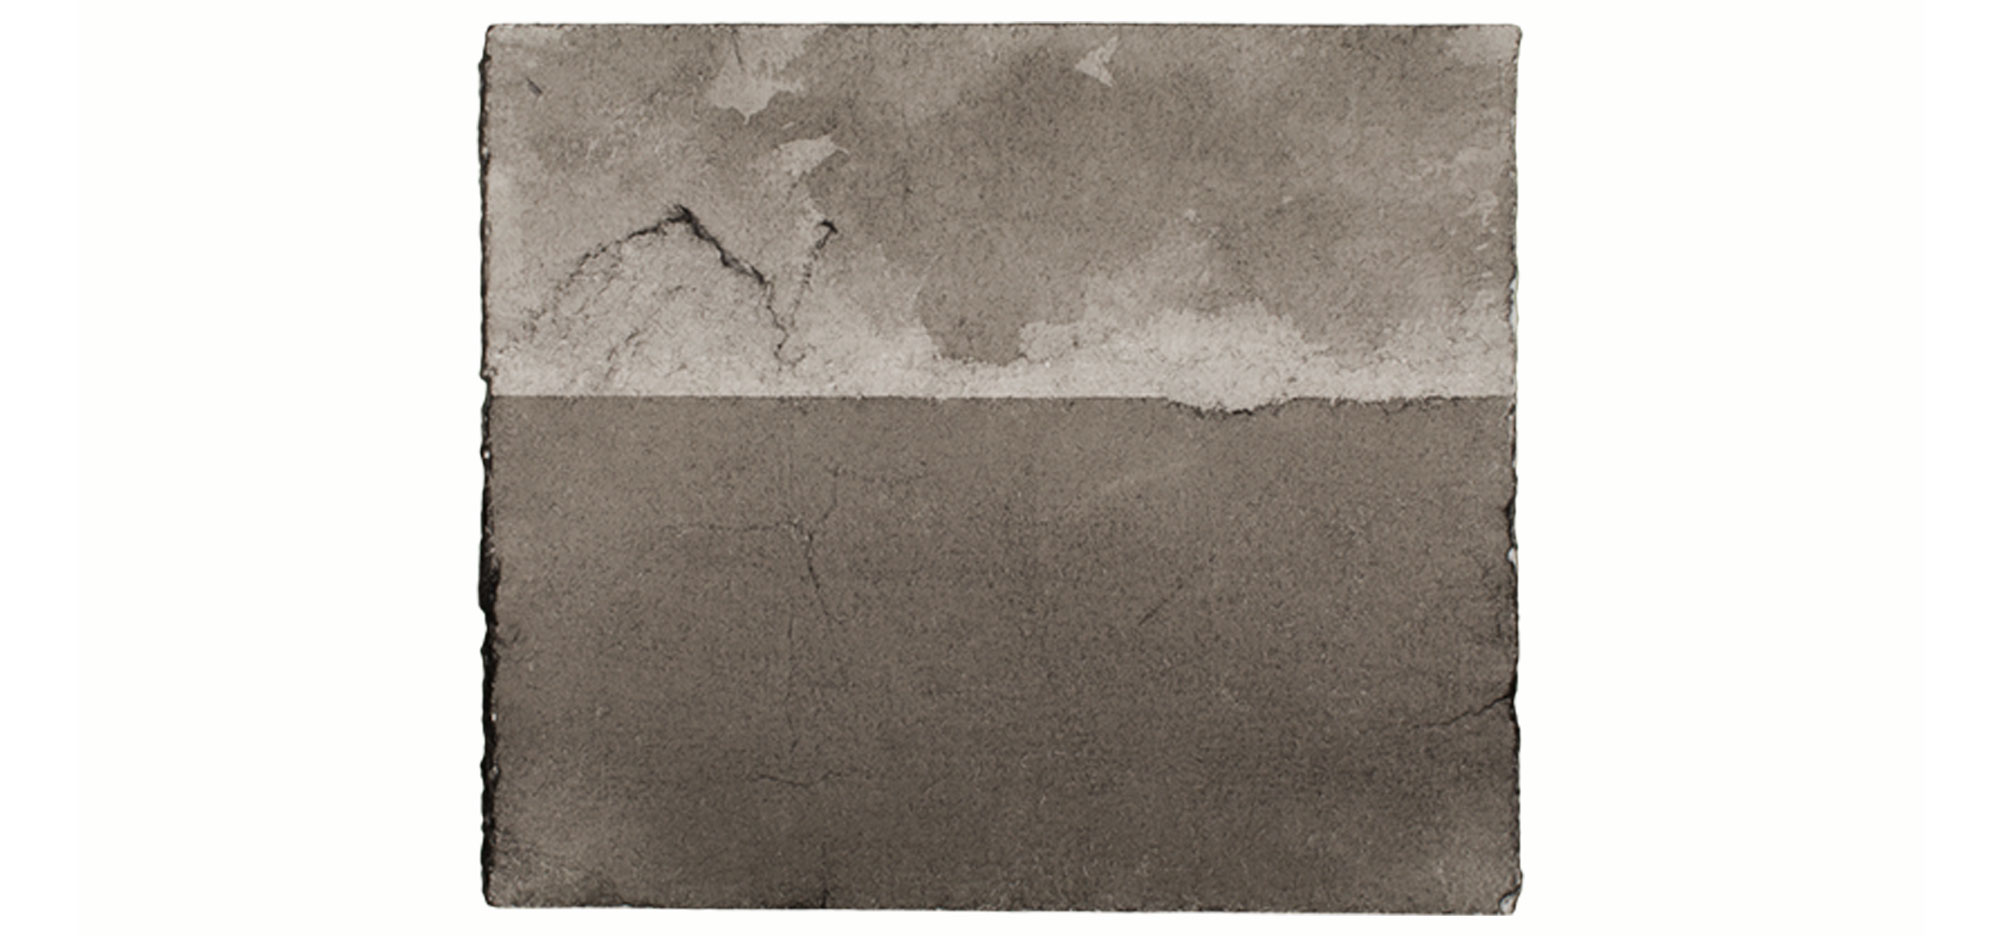   Sem Título, 2017. Nanquim   sobre   papel. 14 x 12 cm     Untitled, 2017. Ink on paper. 14 x 12 cm  